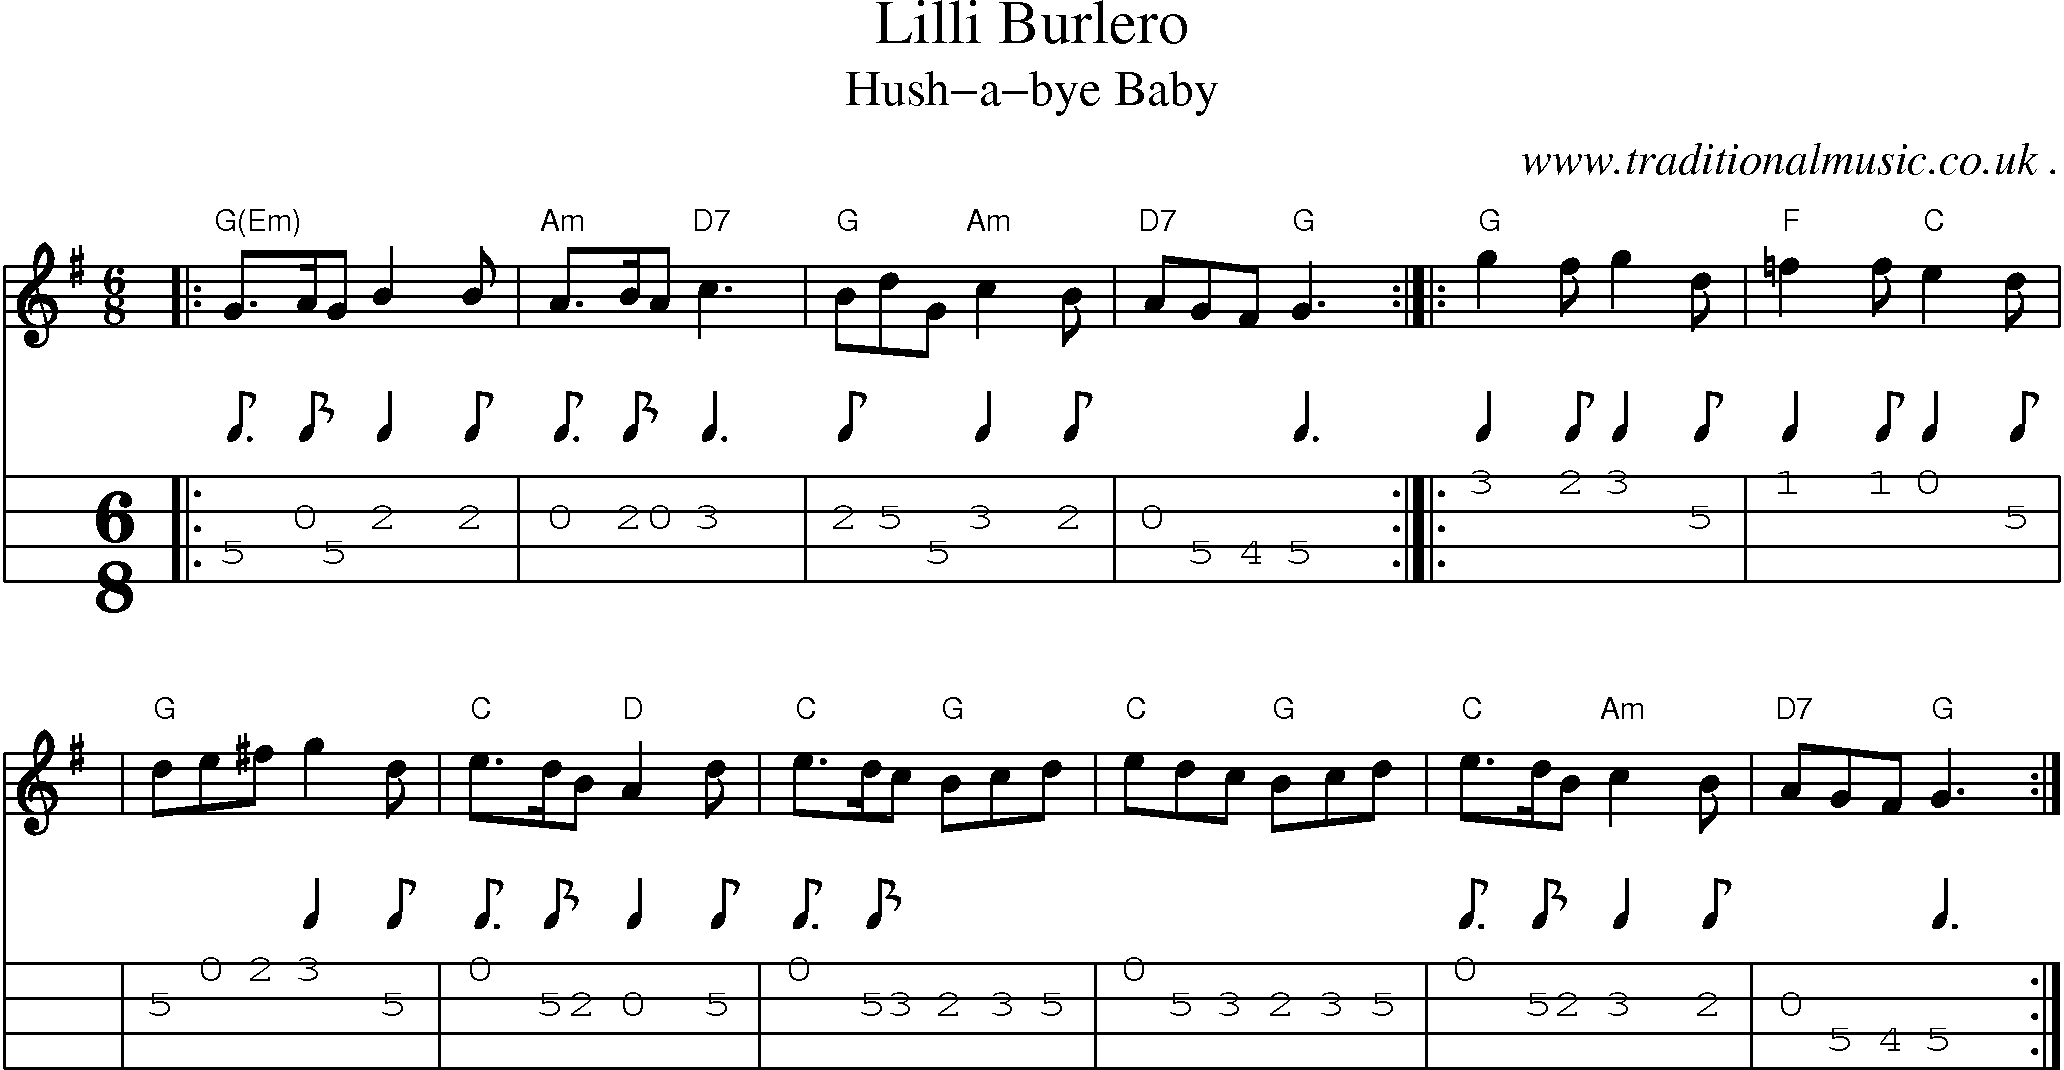 Sheet-music  score, Chords and Mandolin Tabs for Lilli Burlero